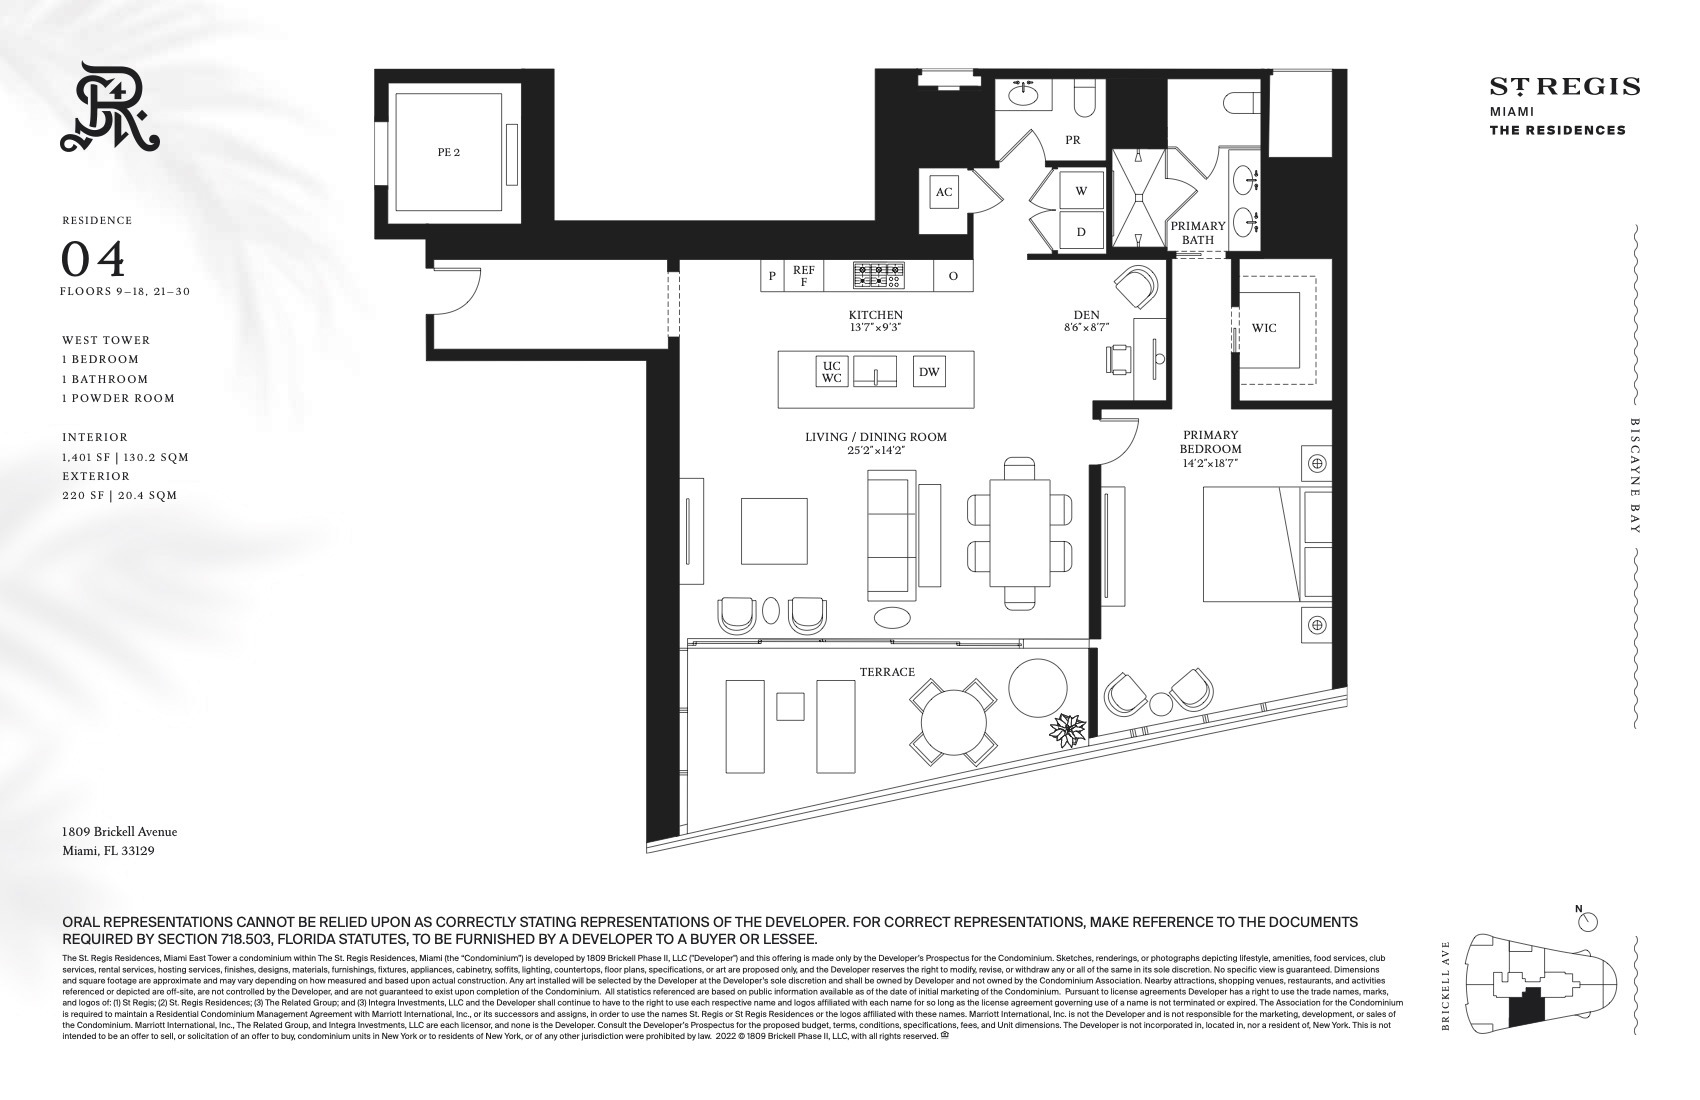 Floor Plan for St. Regis Brickell Floorplans, Residence 04